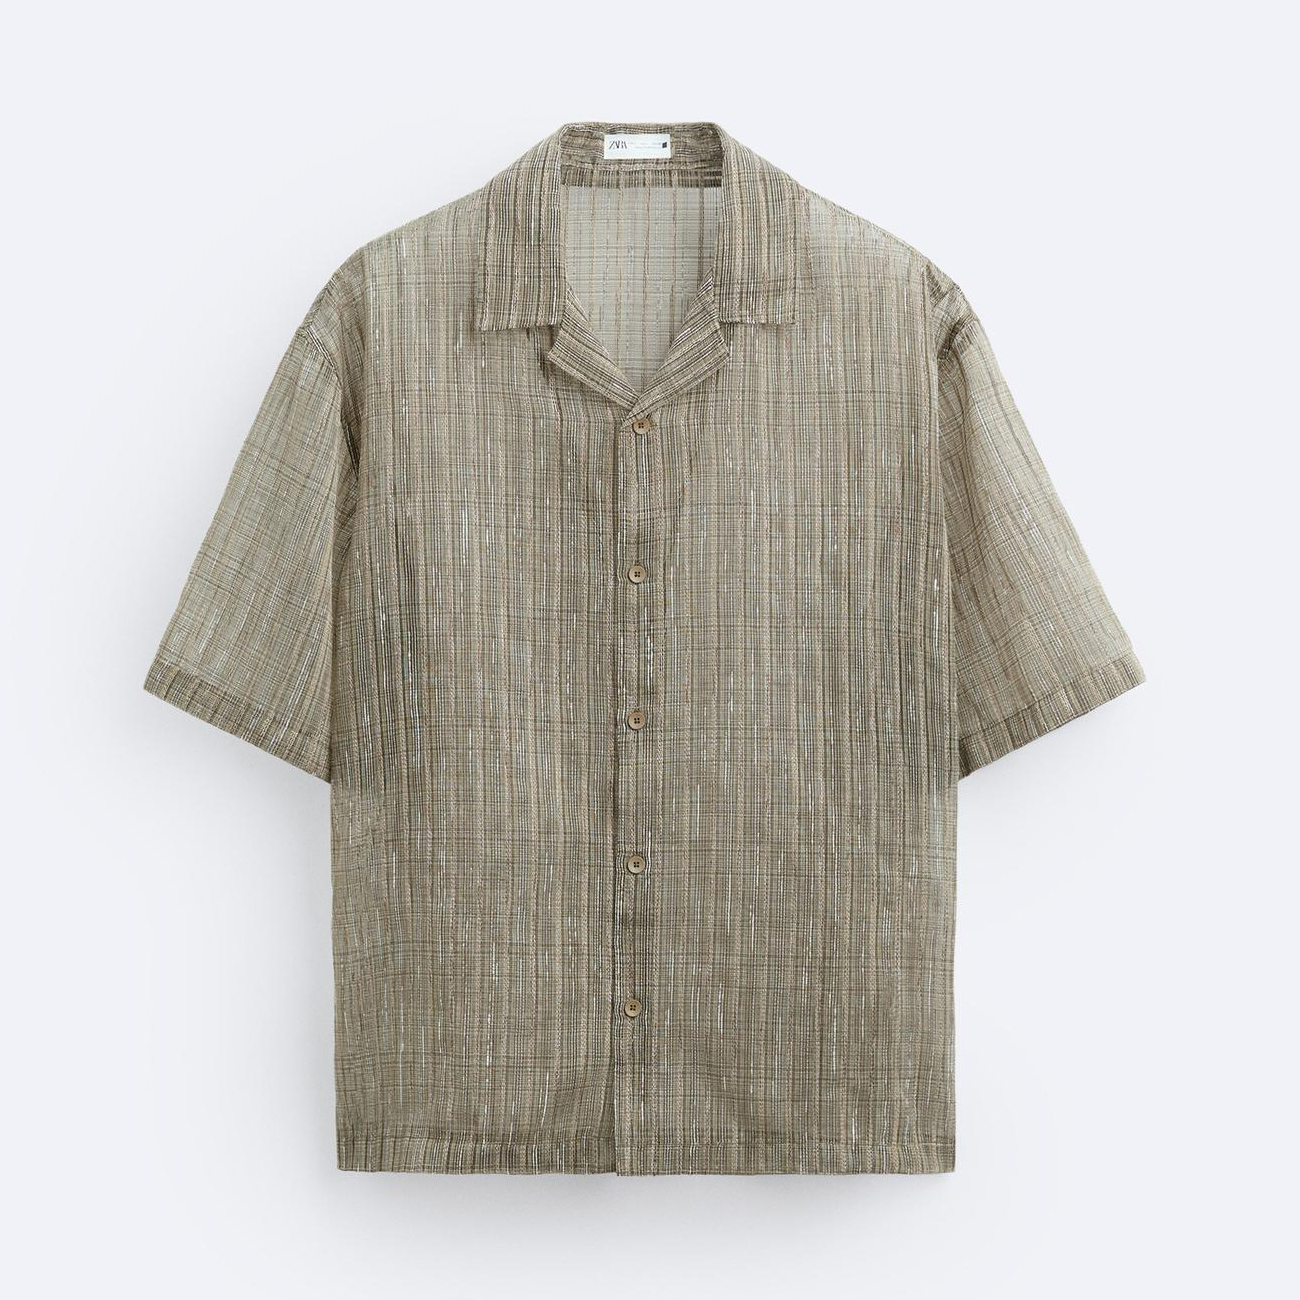 Рубашка Zara Semi-sheer Textured, серо-коричневый рубашка zara embroidered floral semi sheer черный